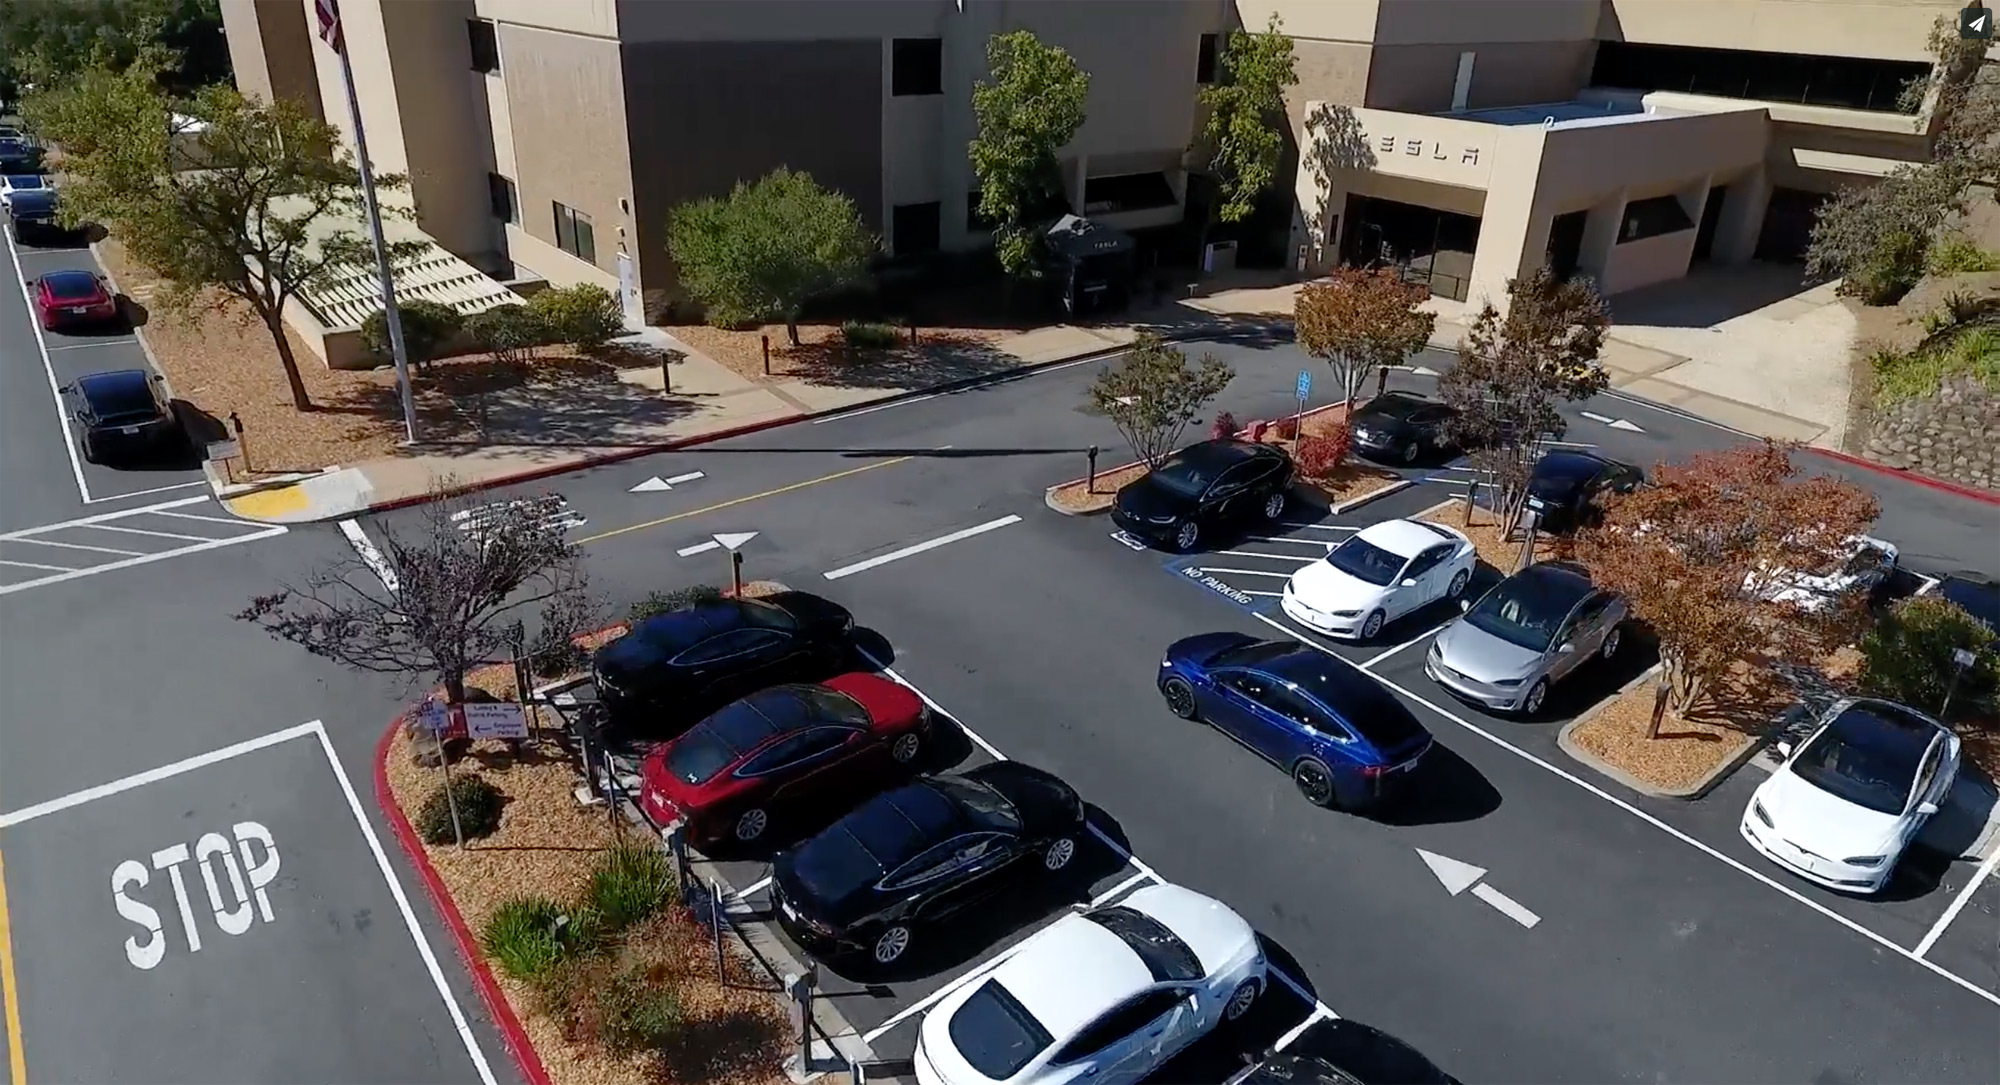 Tesla Model S fully autonomous